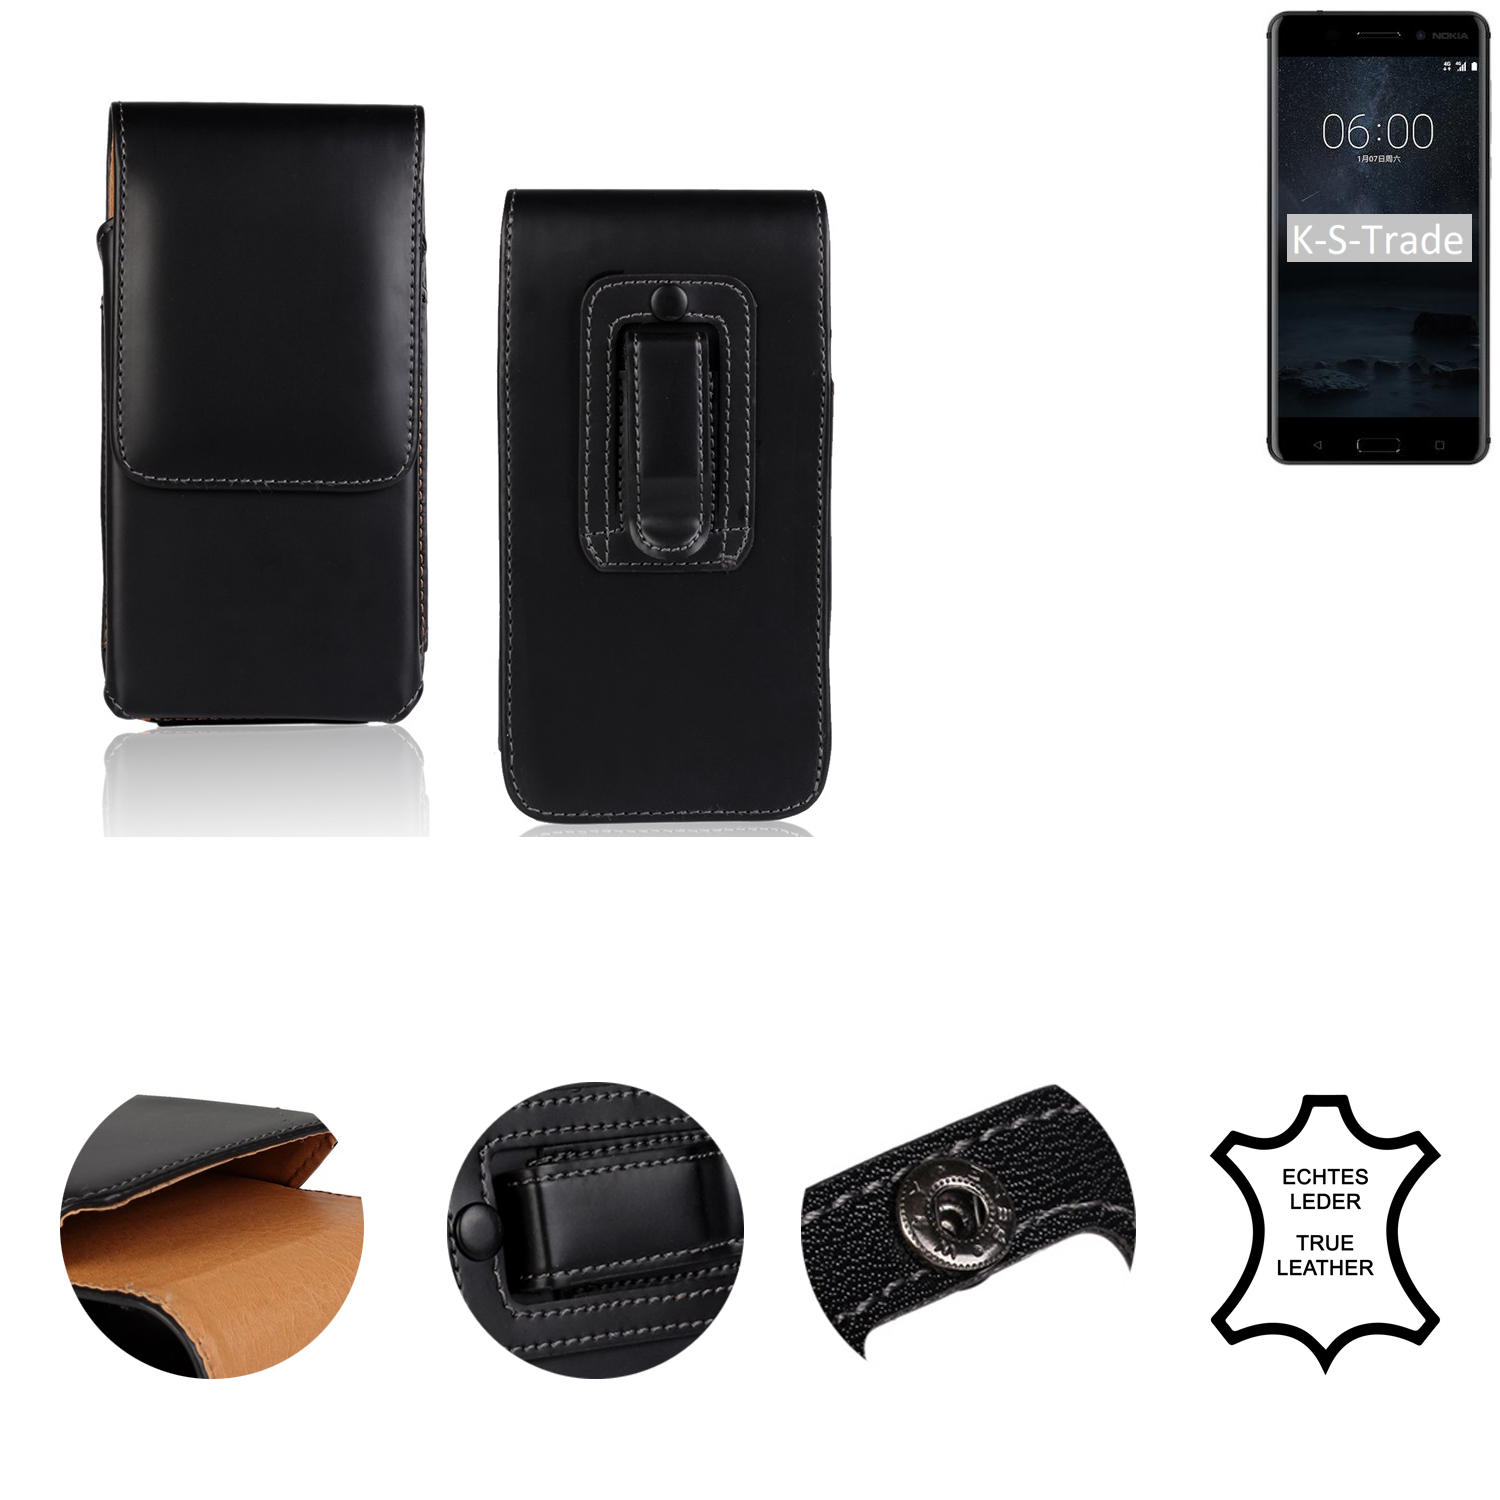 SIM, Holster K-S-TRADE Holster, 6 Nokia, Schutzhülle, Single schwarz